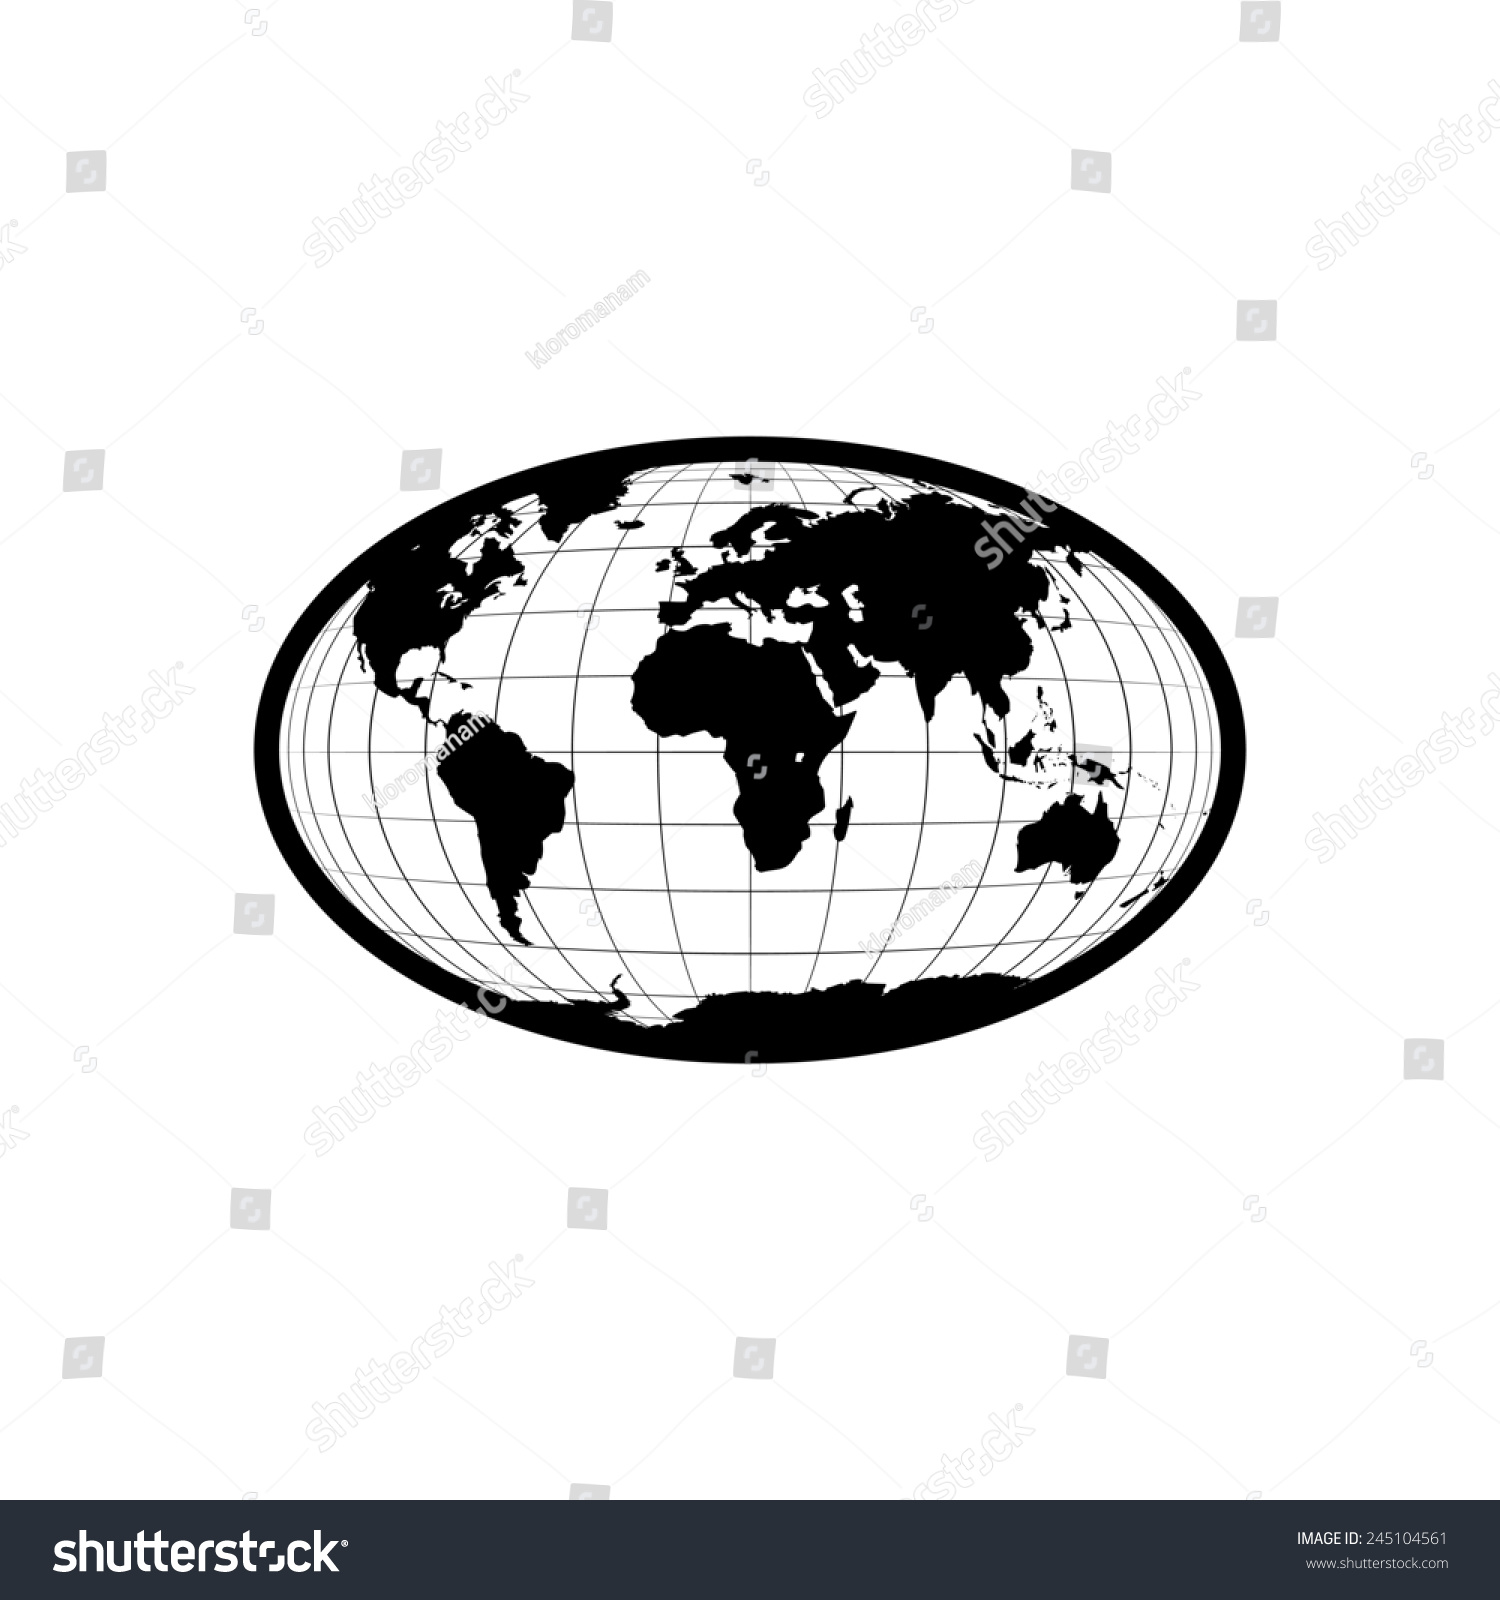 Oval Globe Stock Illustration 245104561 | Shutterstock